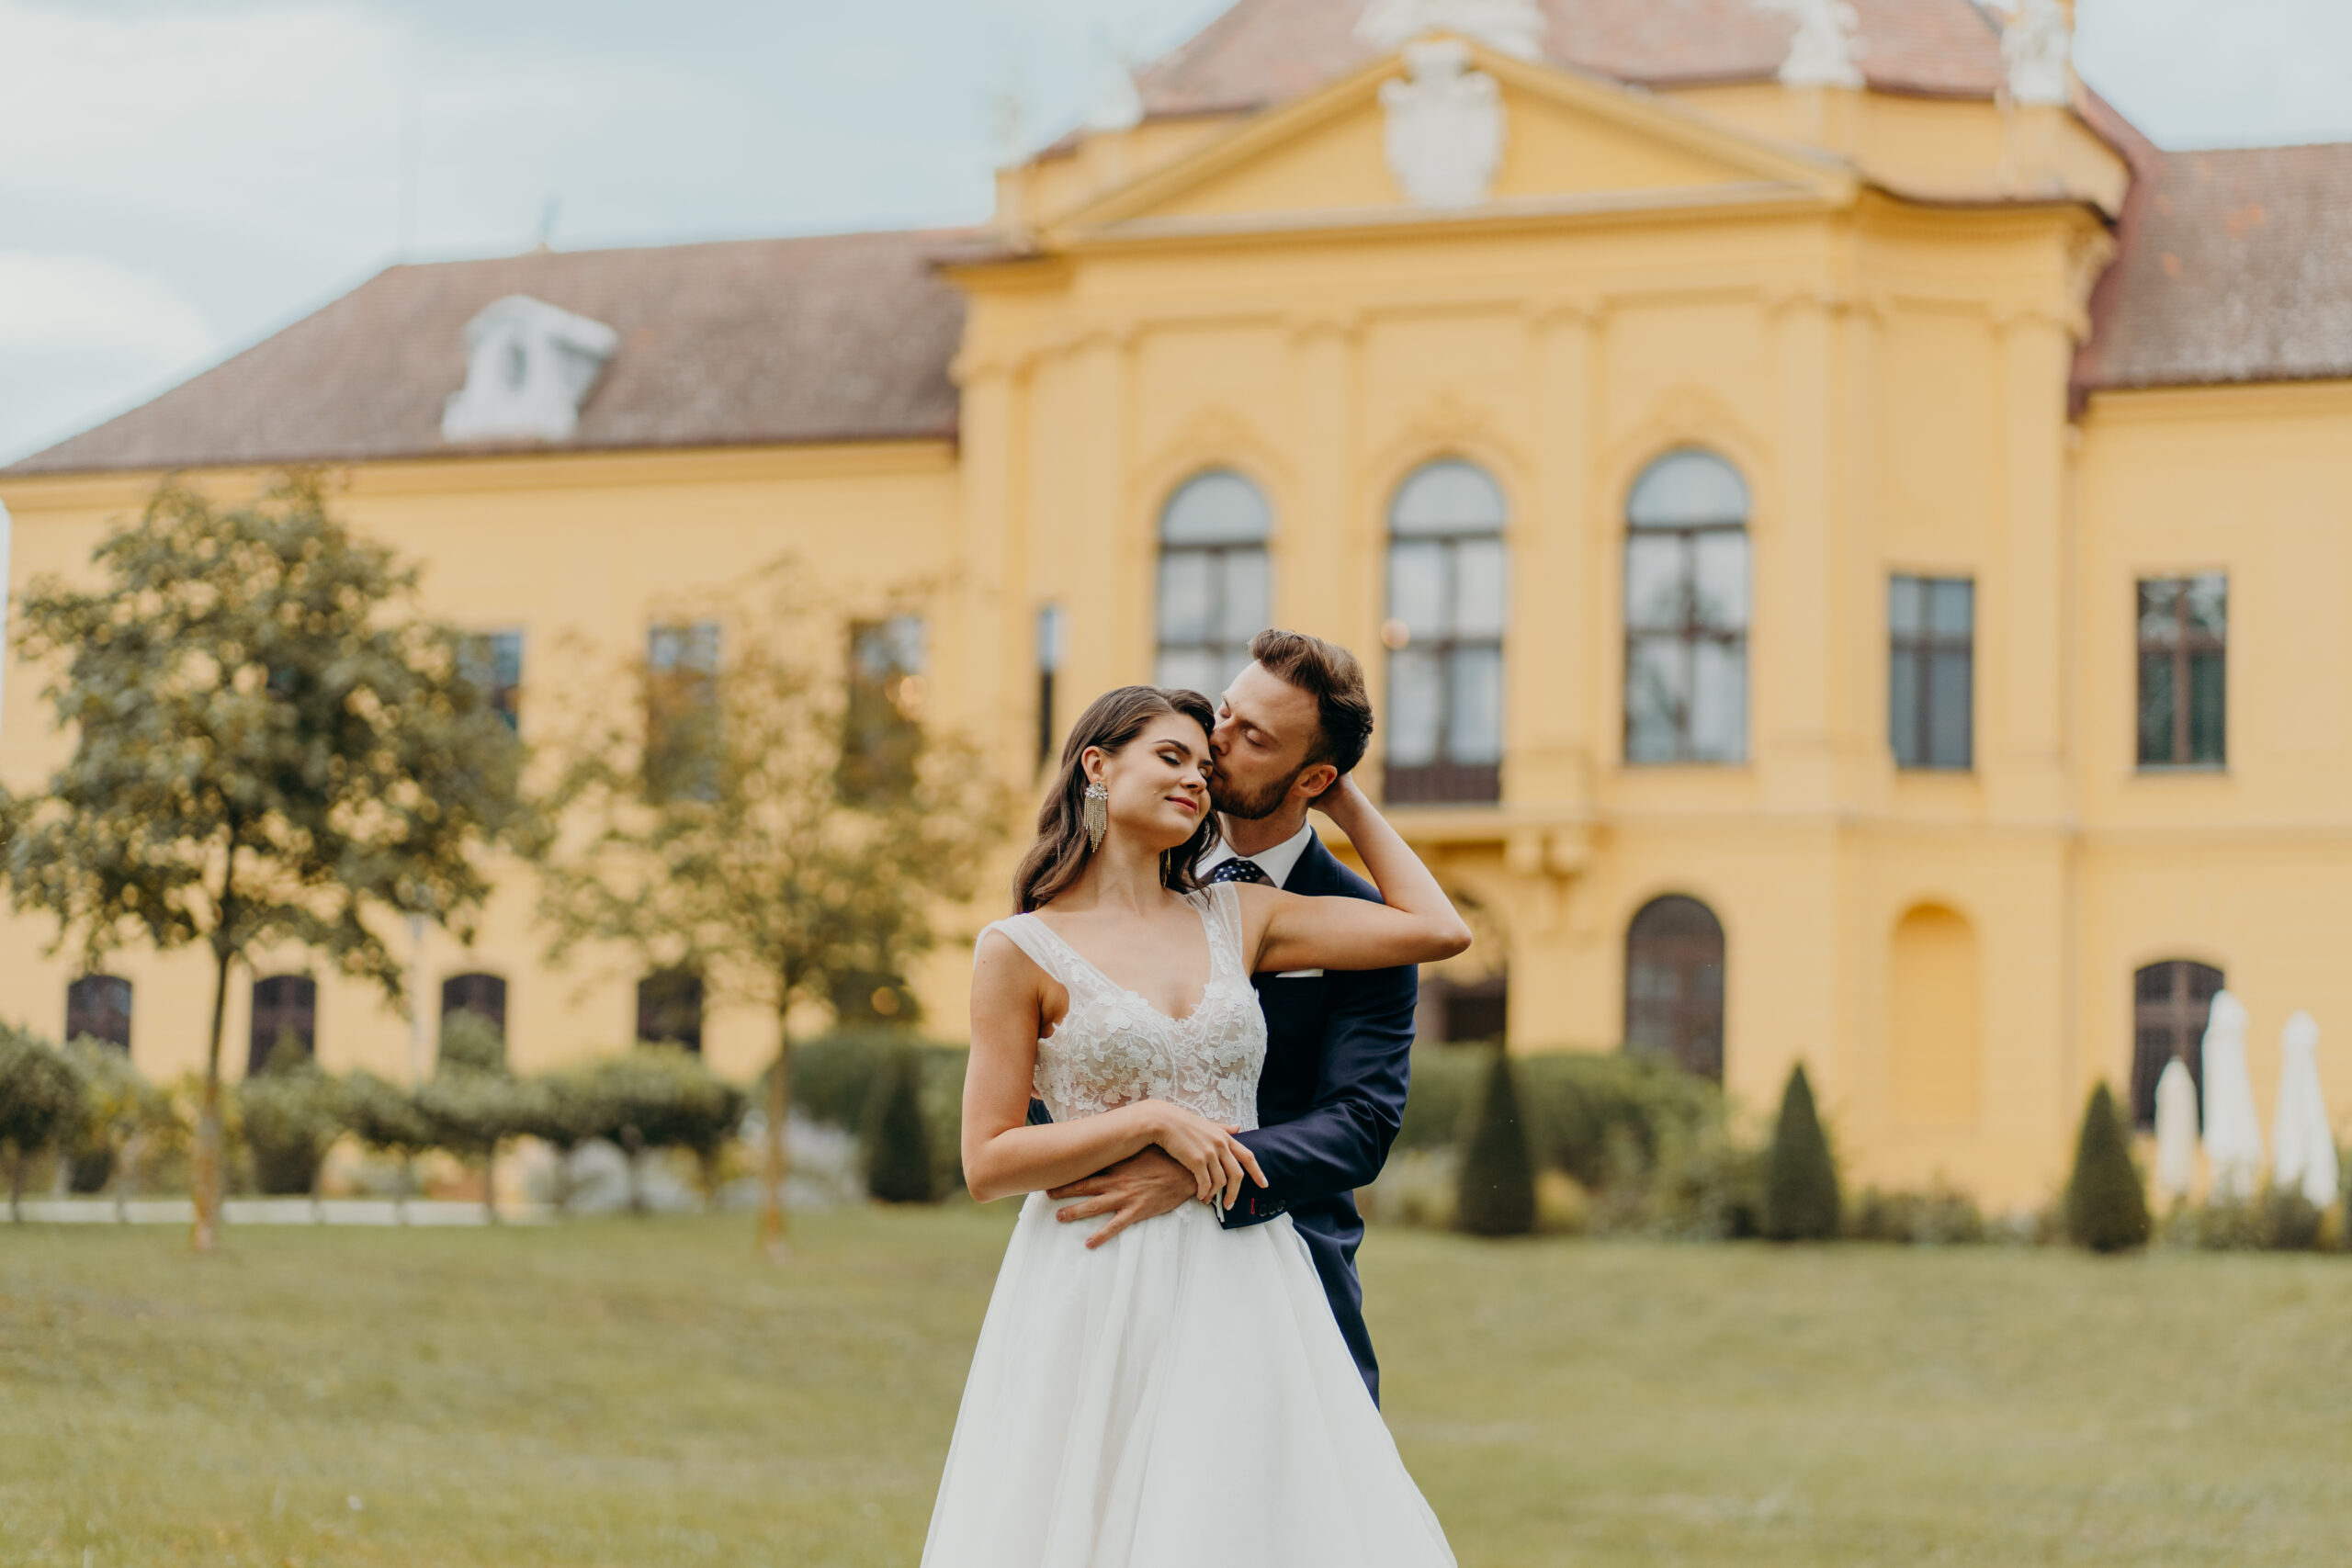 Eva & Florian Hochzeitsfotos